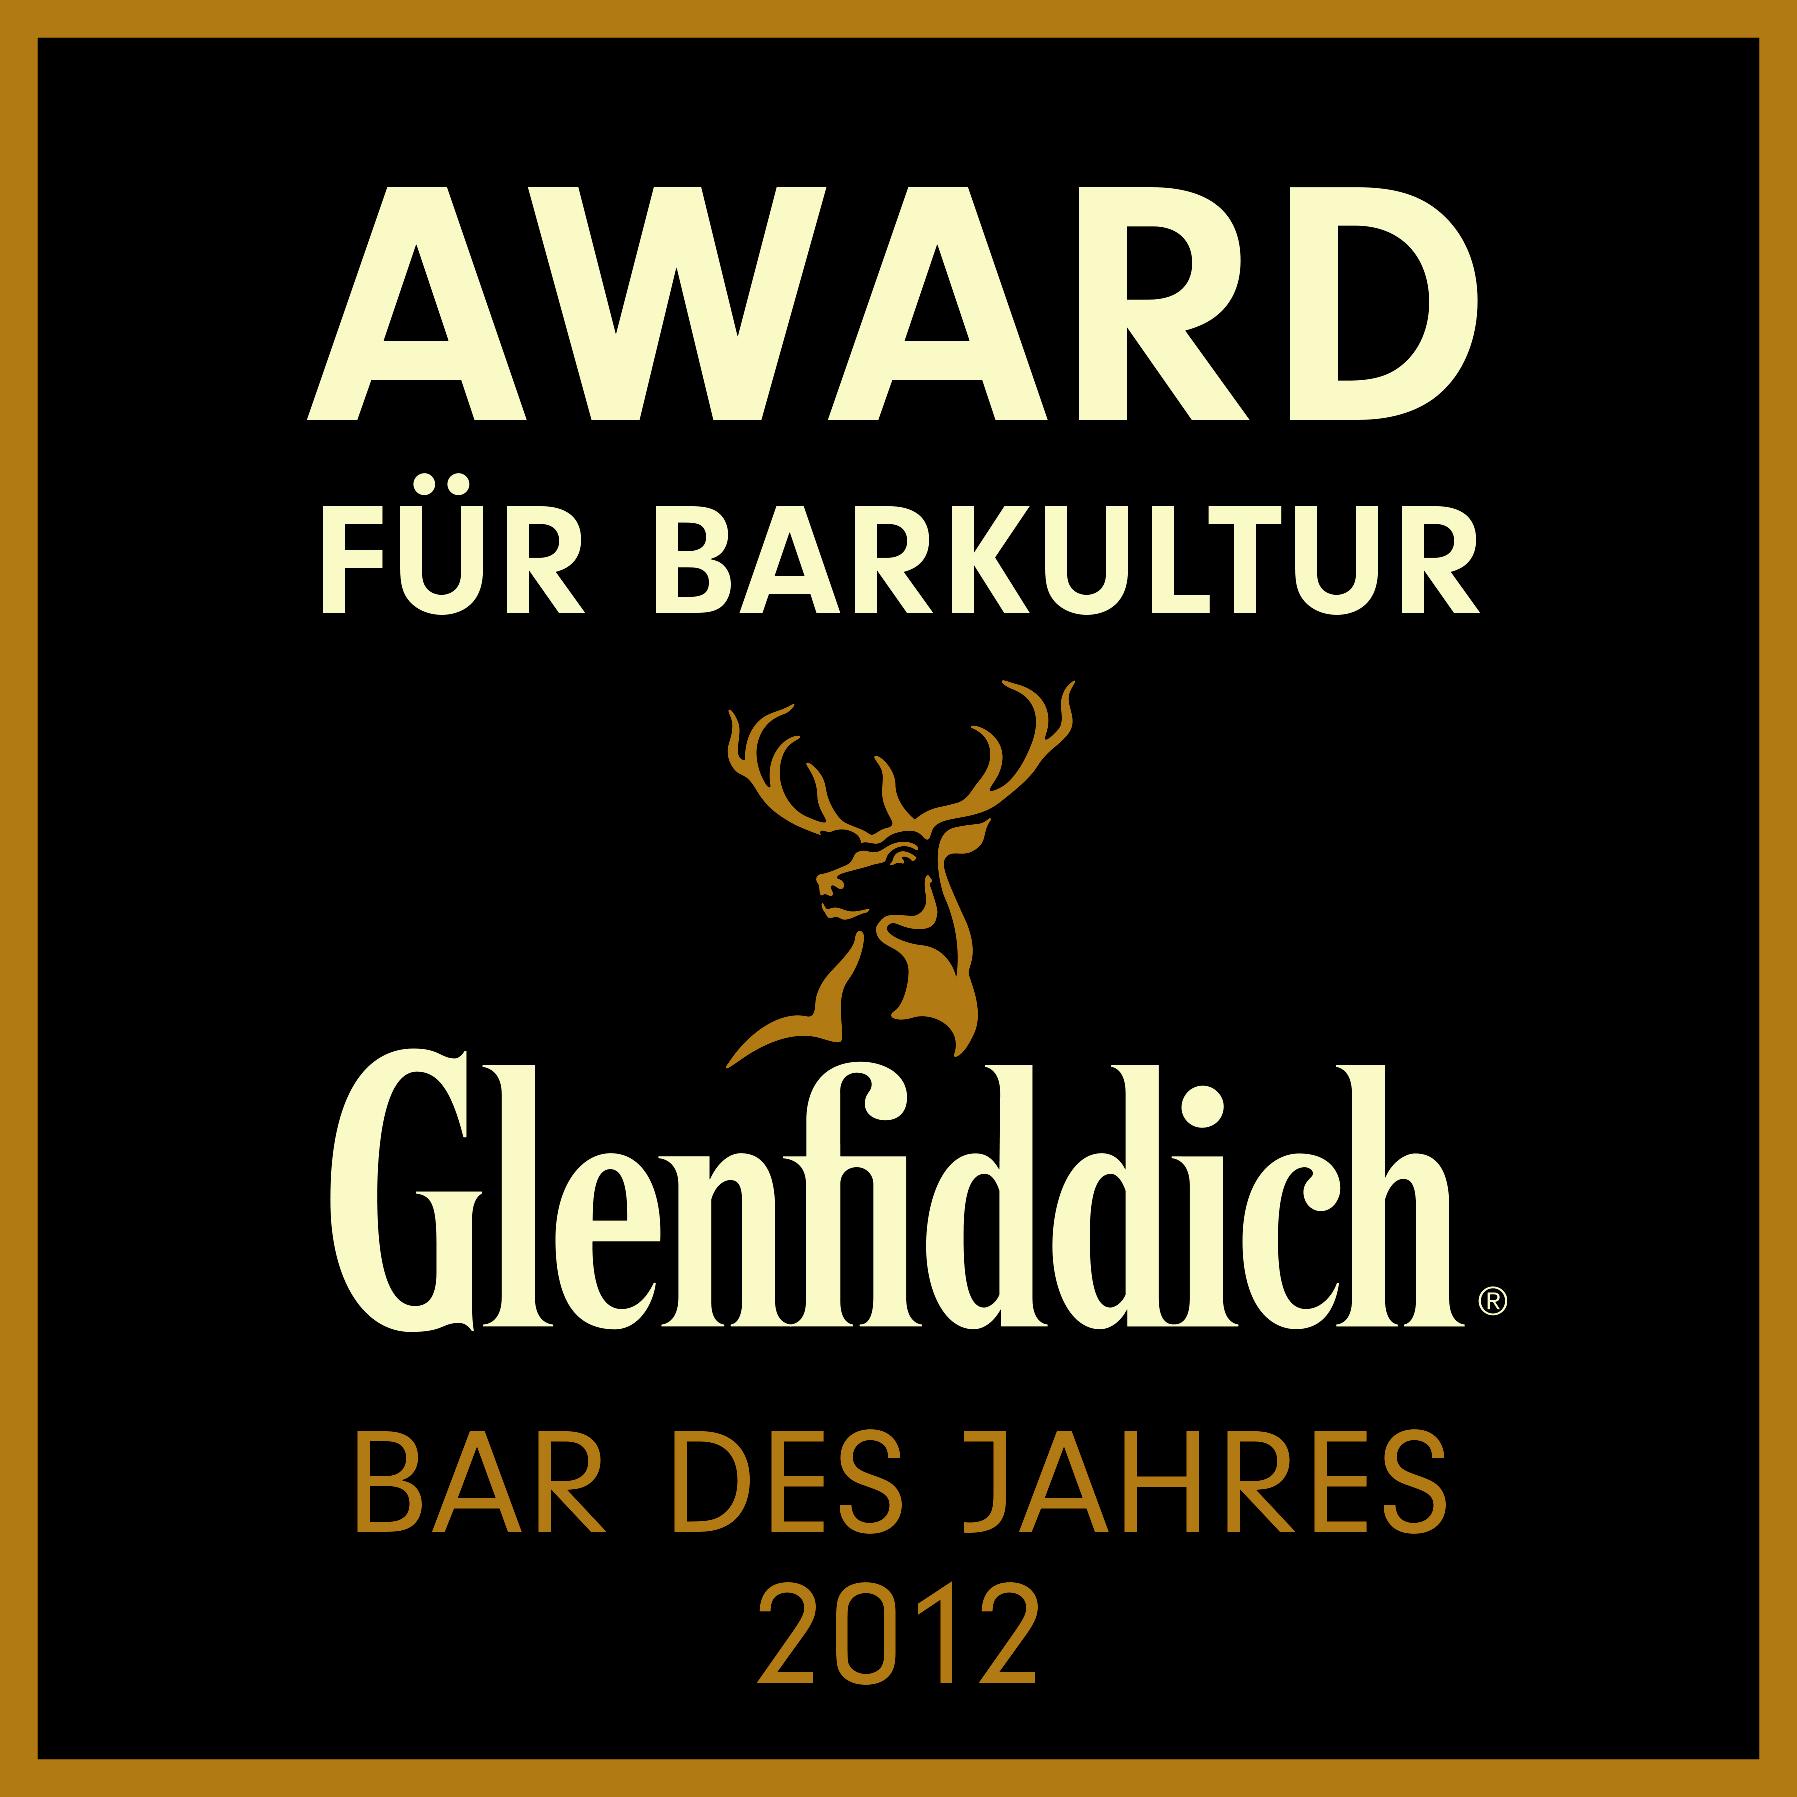 Glenfiddich Award für Barkultur 2012 geht an Jimmy's Bar in Frankfurt am Main